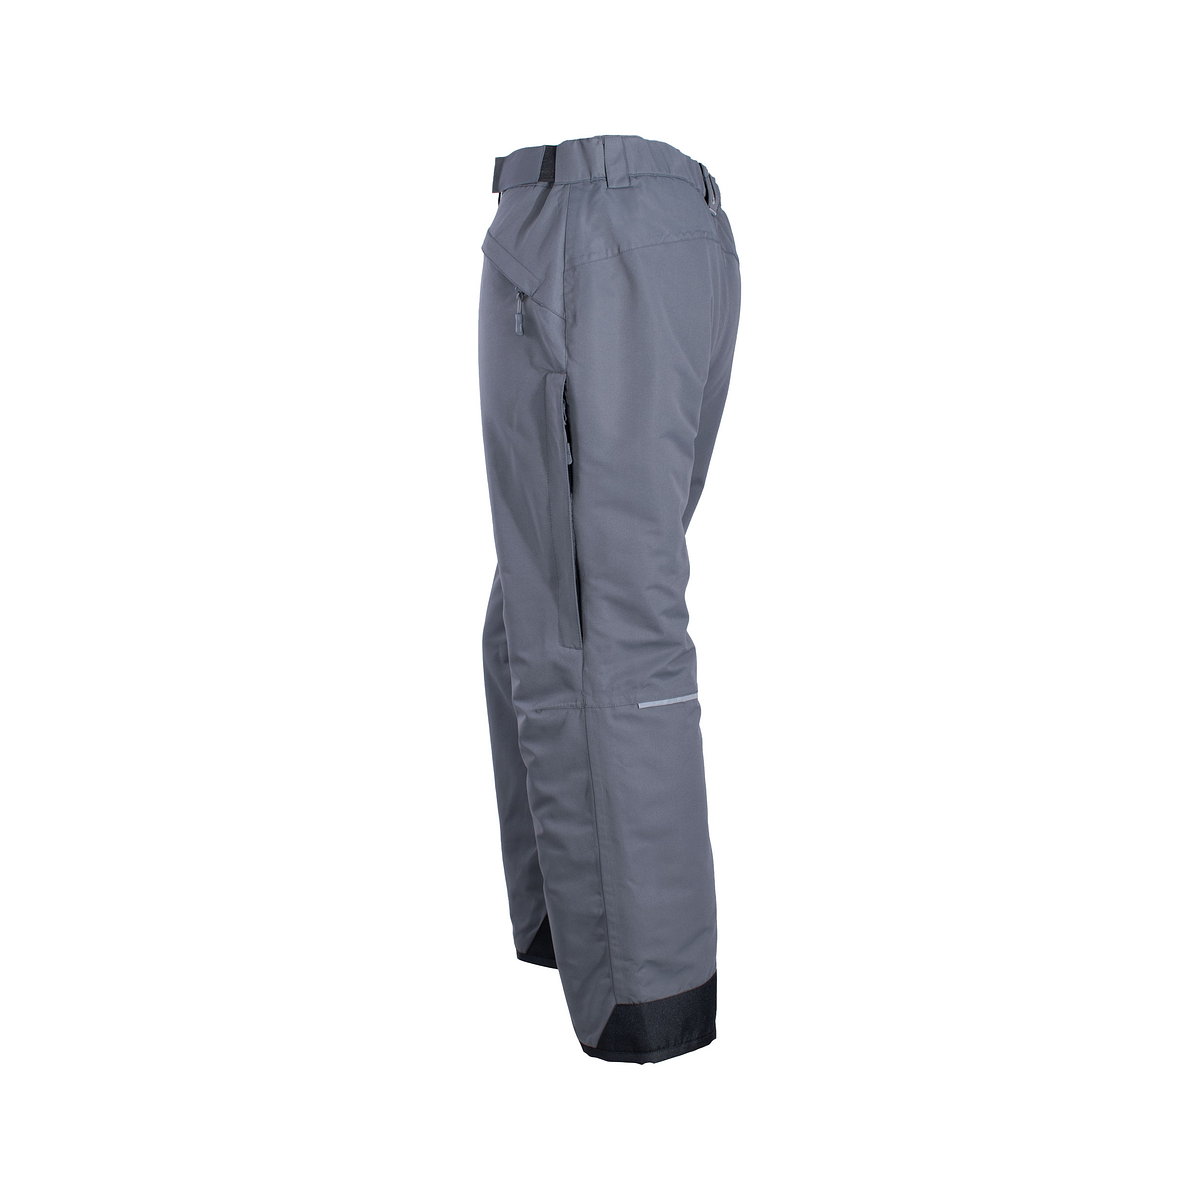 Pantalon Termico Softshell Impermeable Hombre / Mujer Negro